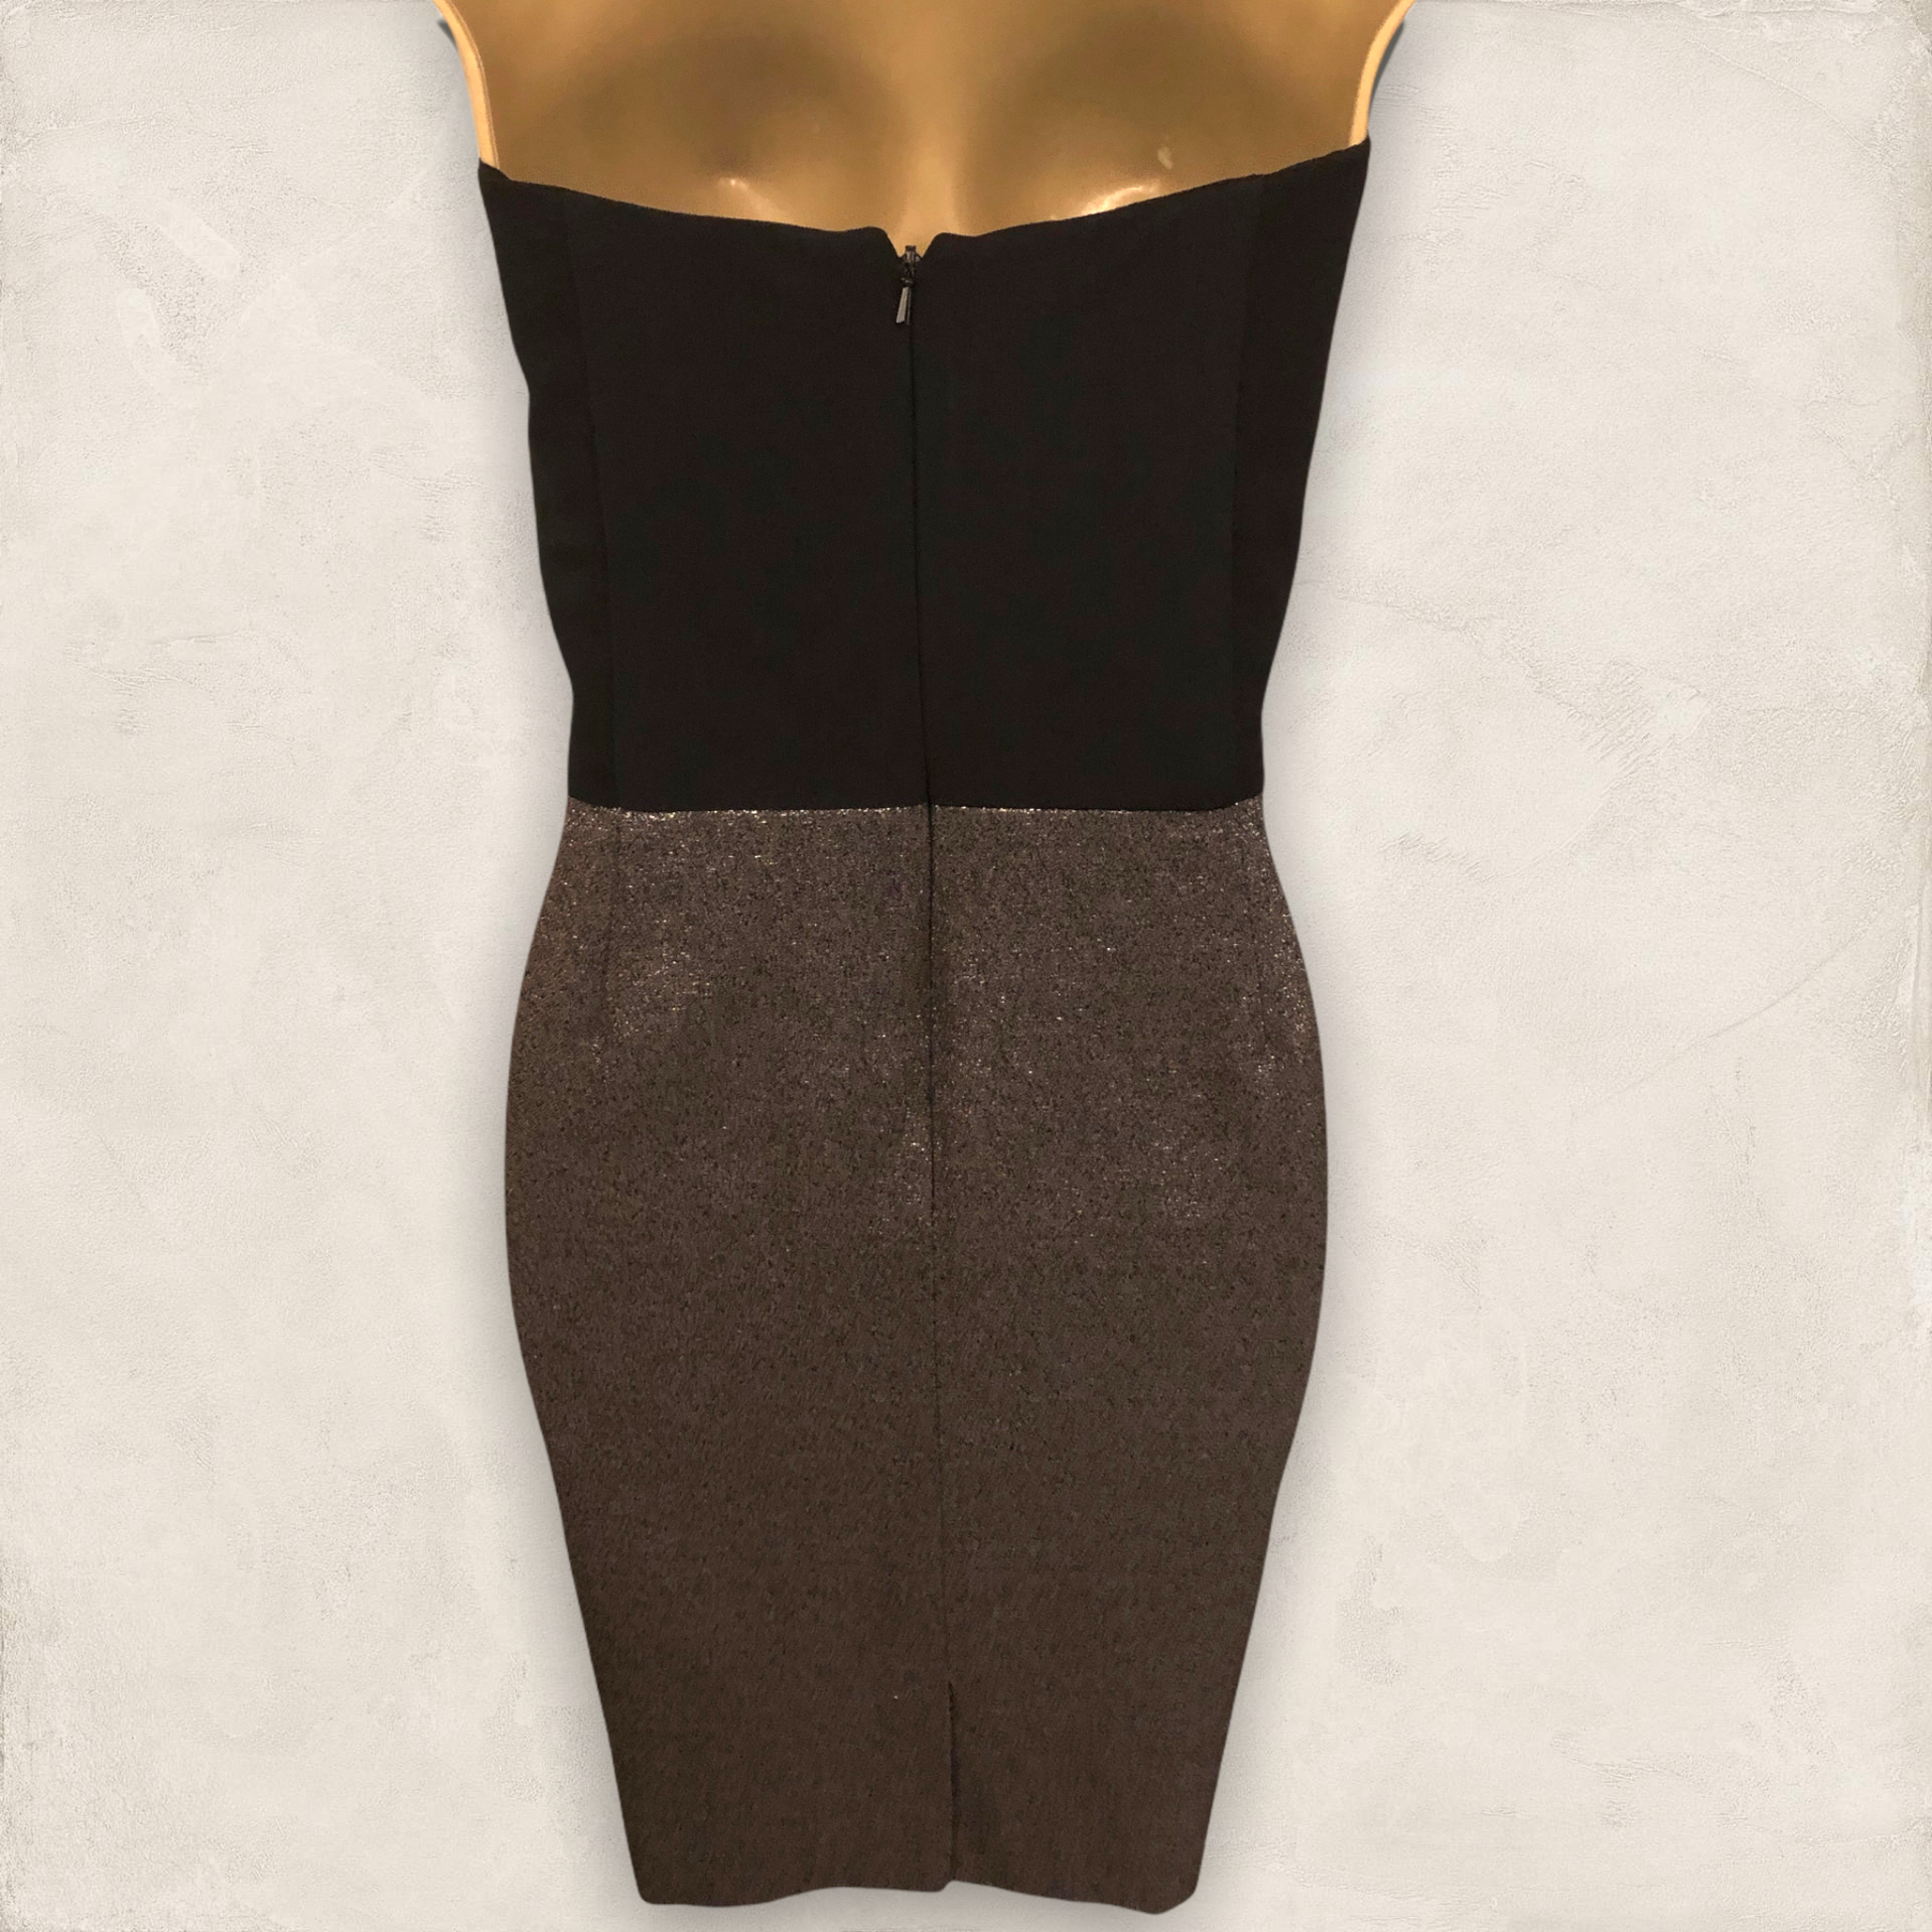 Reiss Della Black & Copper Corset Bustier Dress UK 12 US 8 EU 40 RRP £169 Timeless Fashions